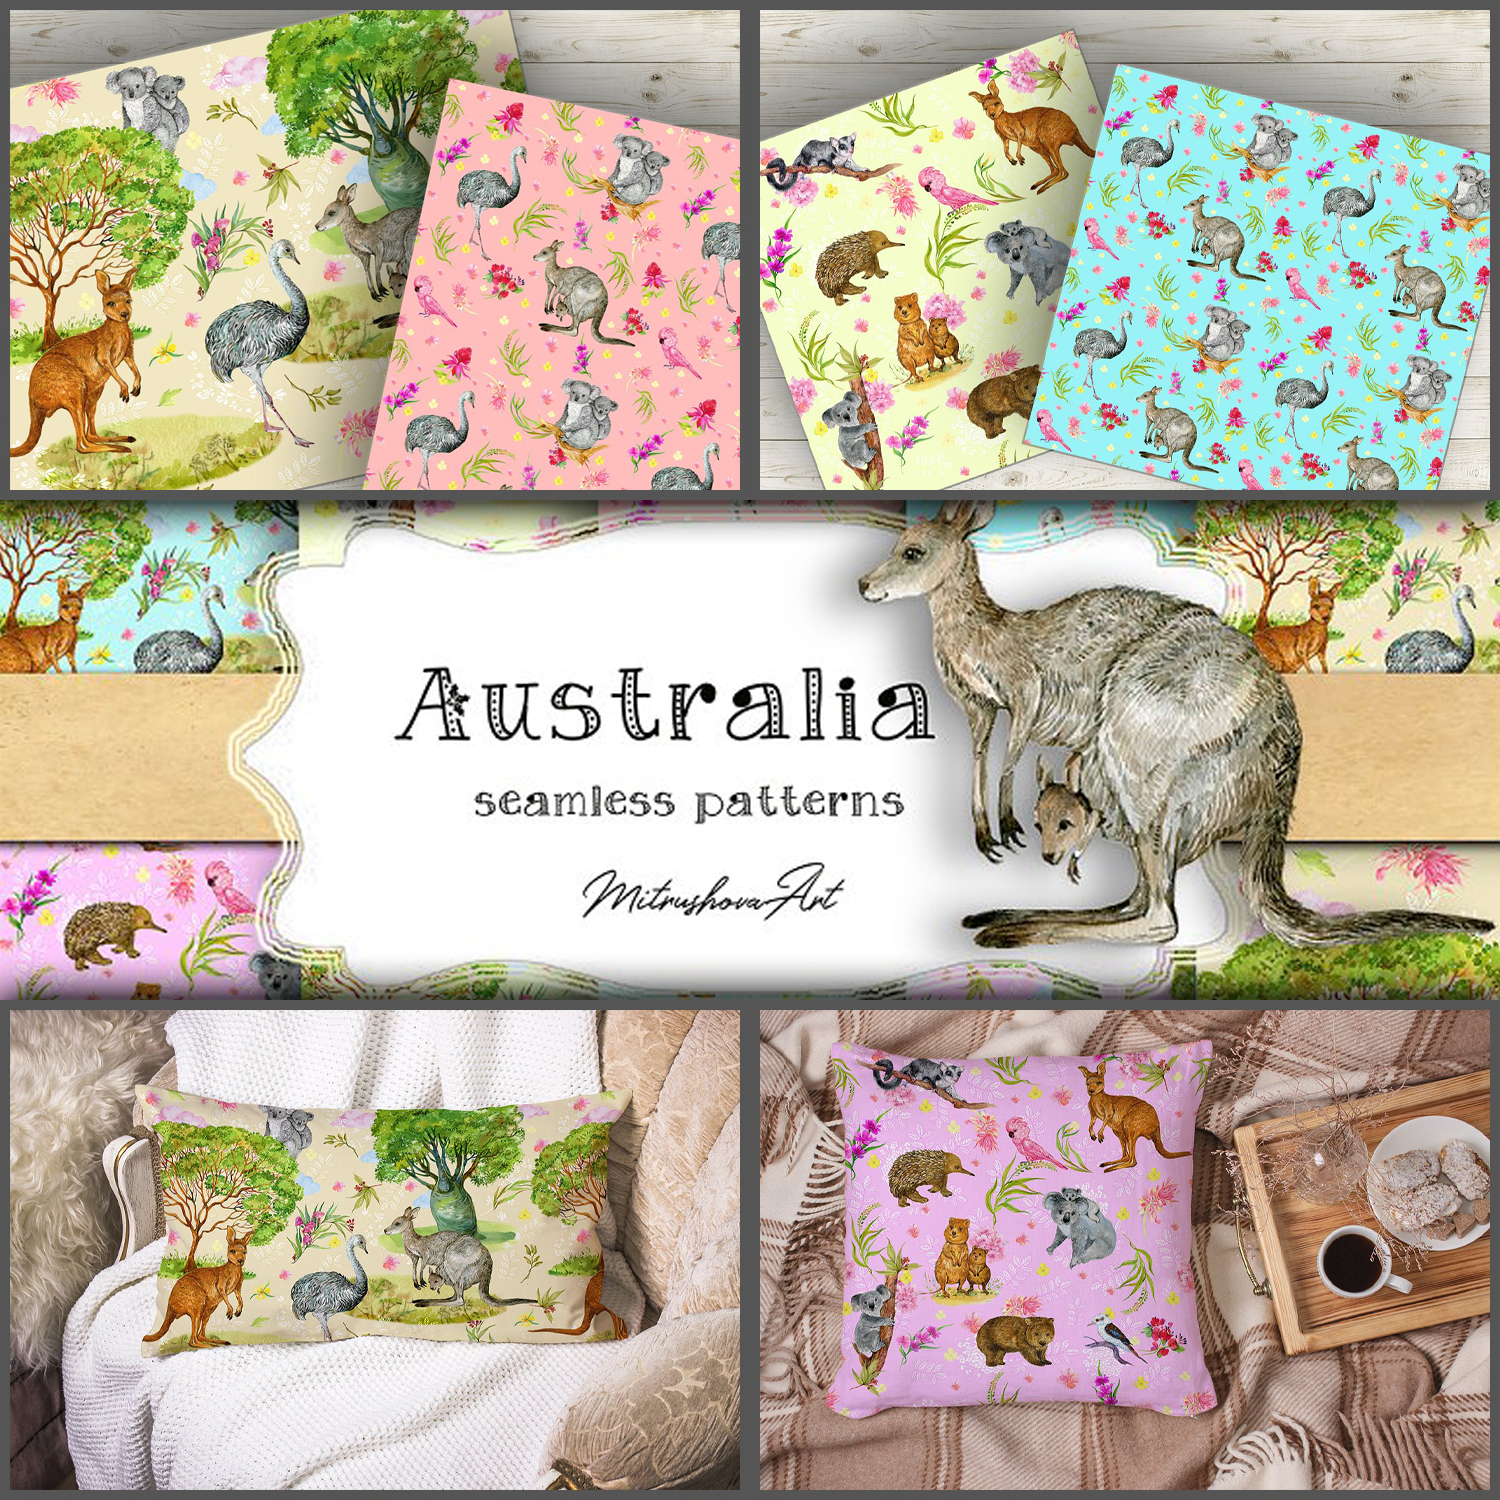 Australia Animal Seamless Patterns cover image.